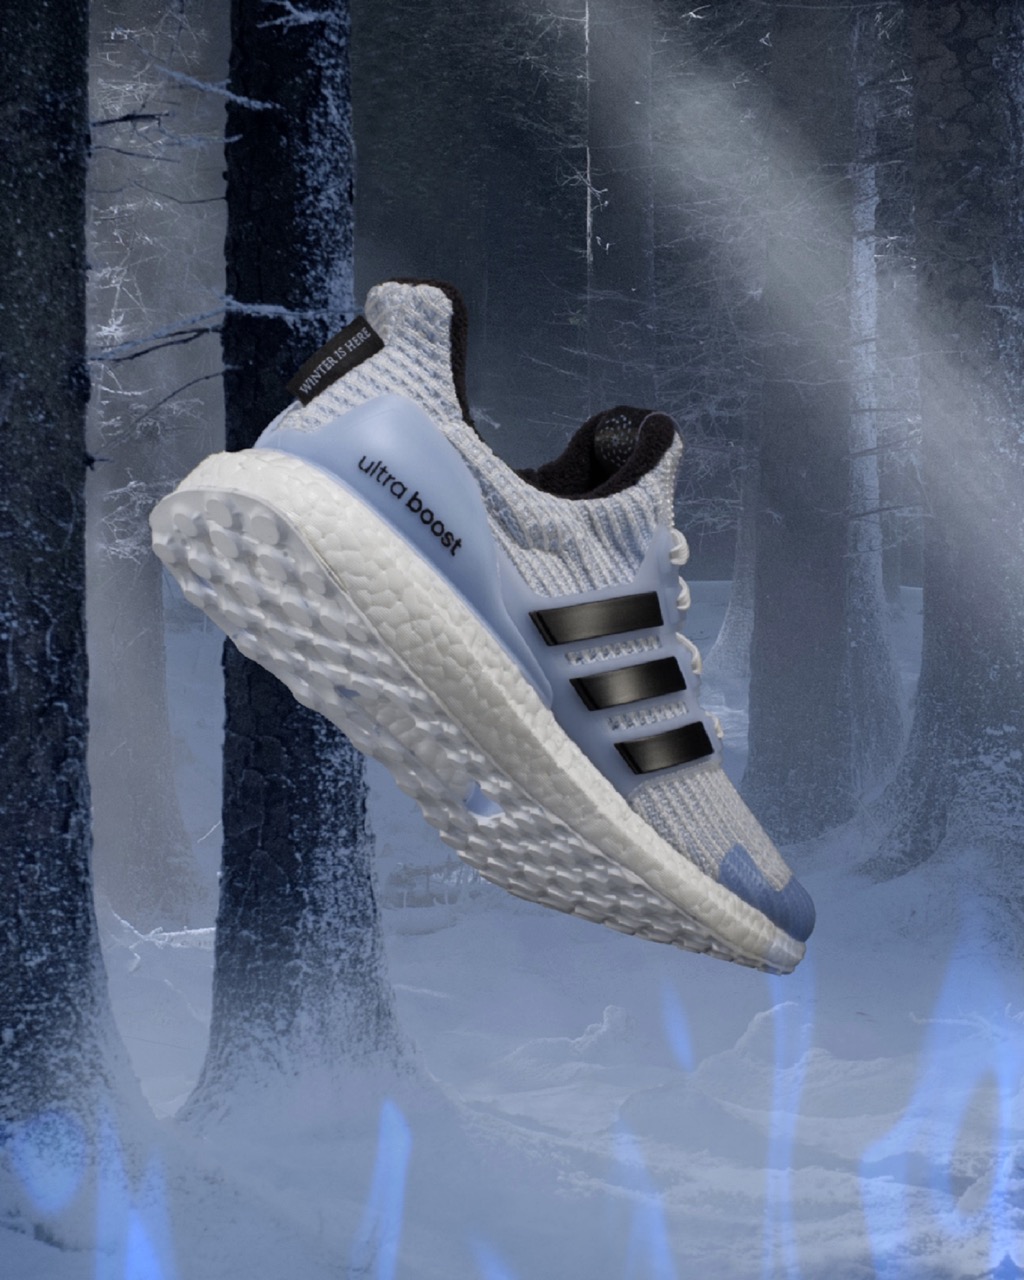 Adidas Announces Game Of Thrones Ultraboost [Photos]